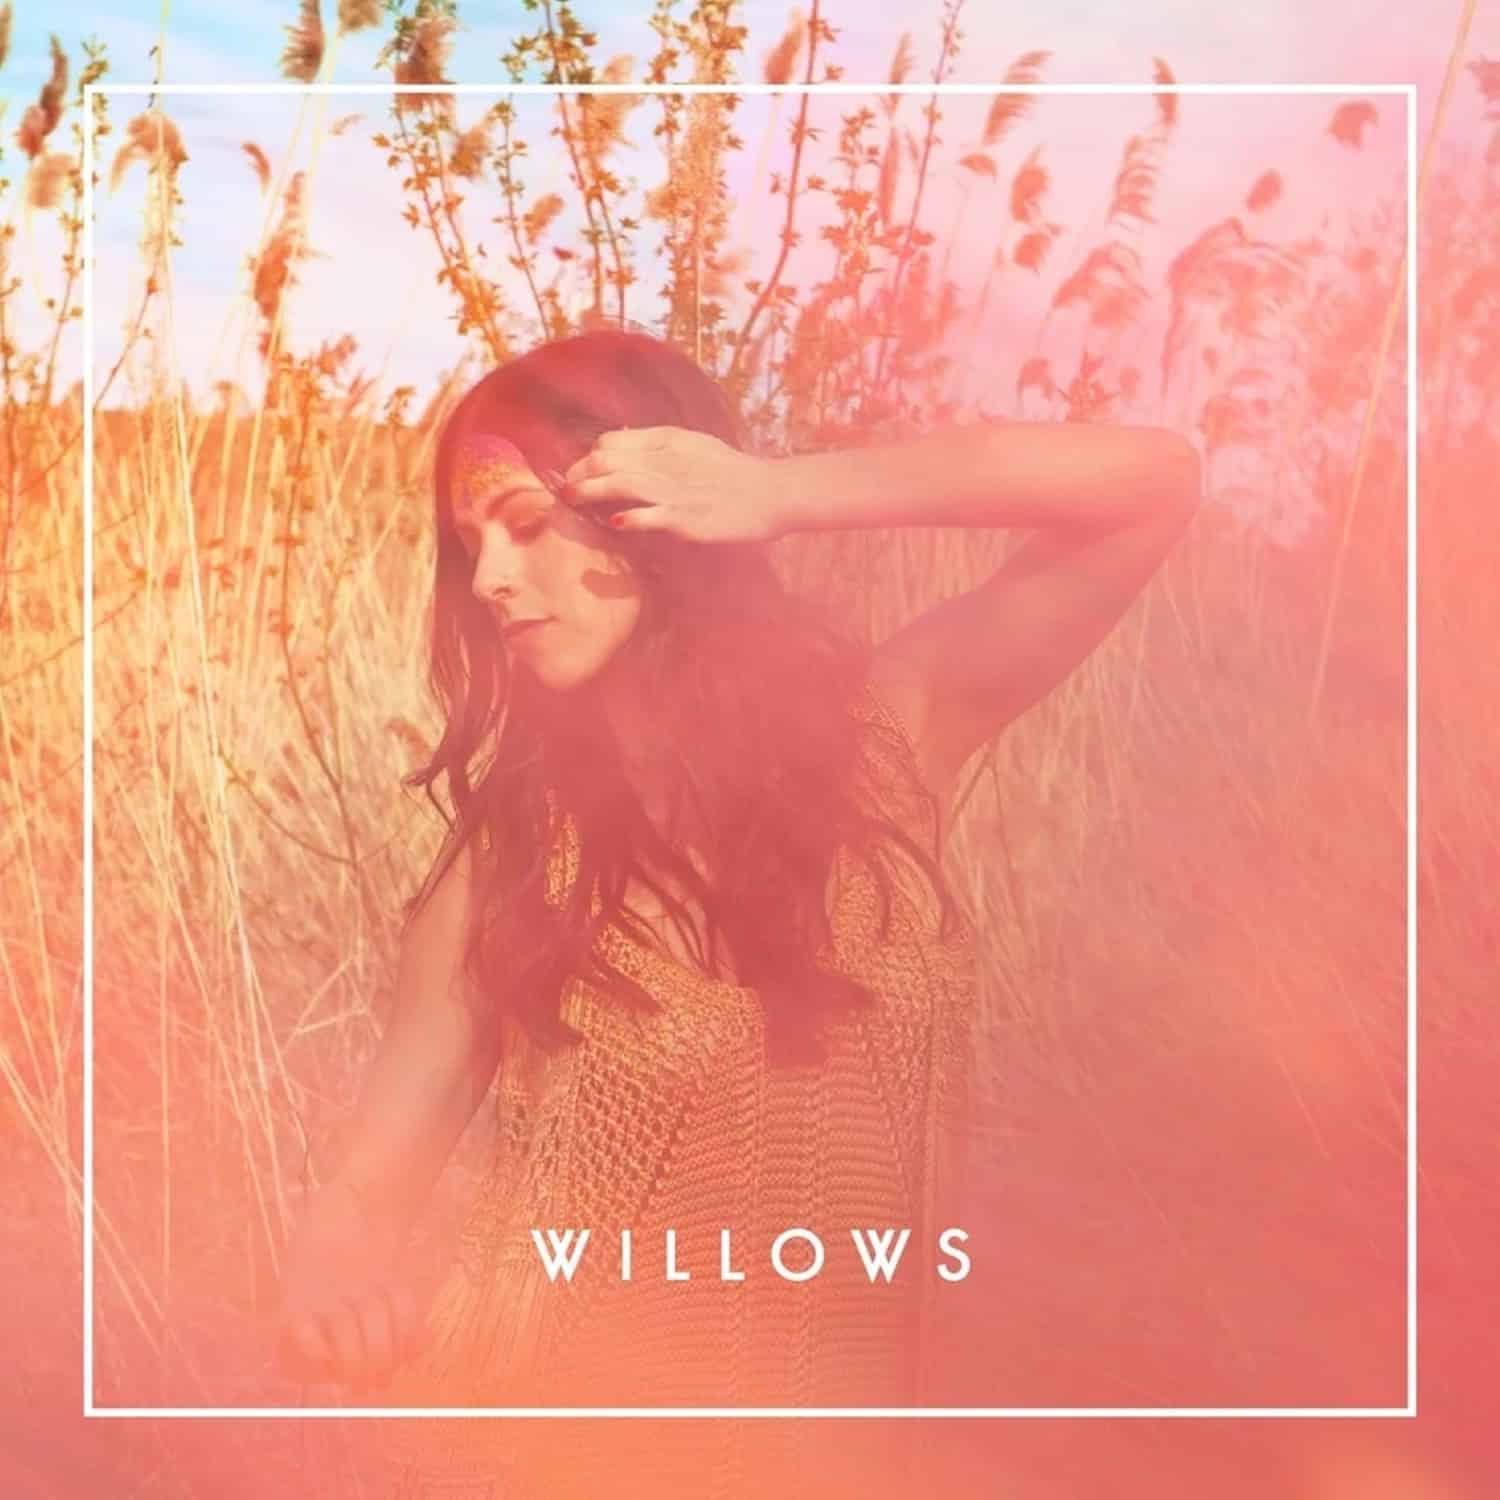 Willows – Willlows